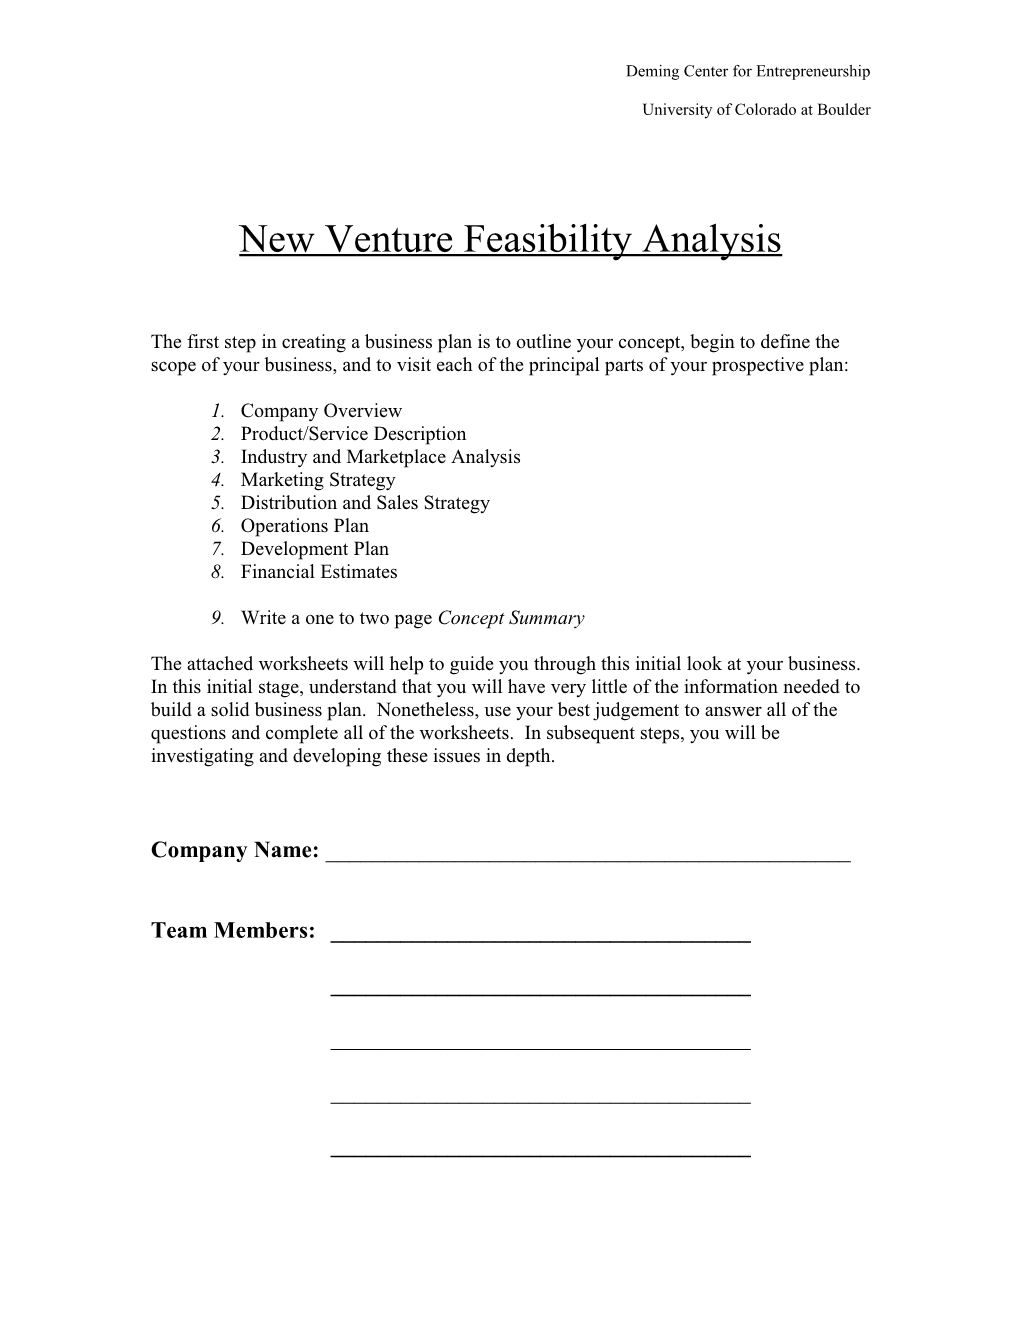 New Venture Feasibility Analysispage 1